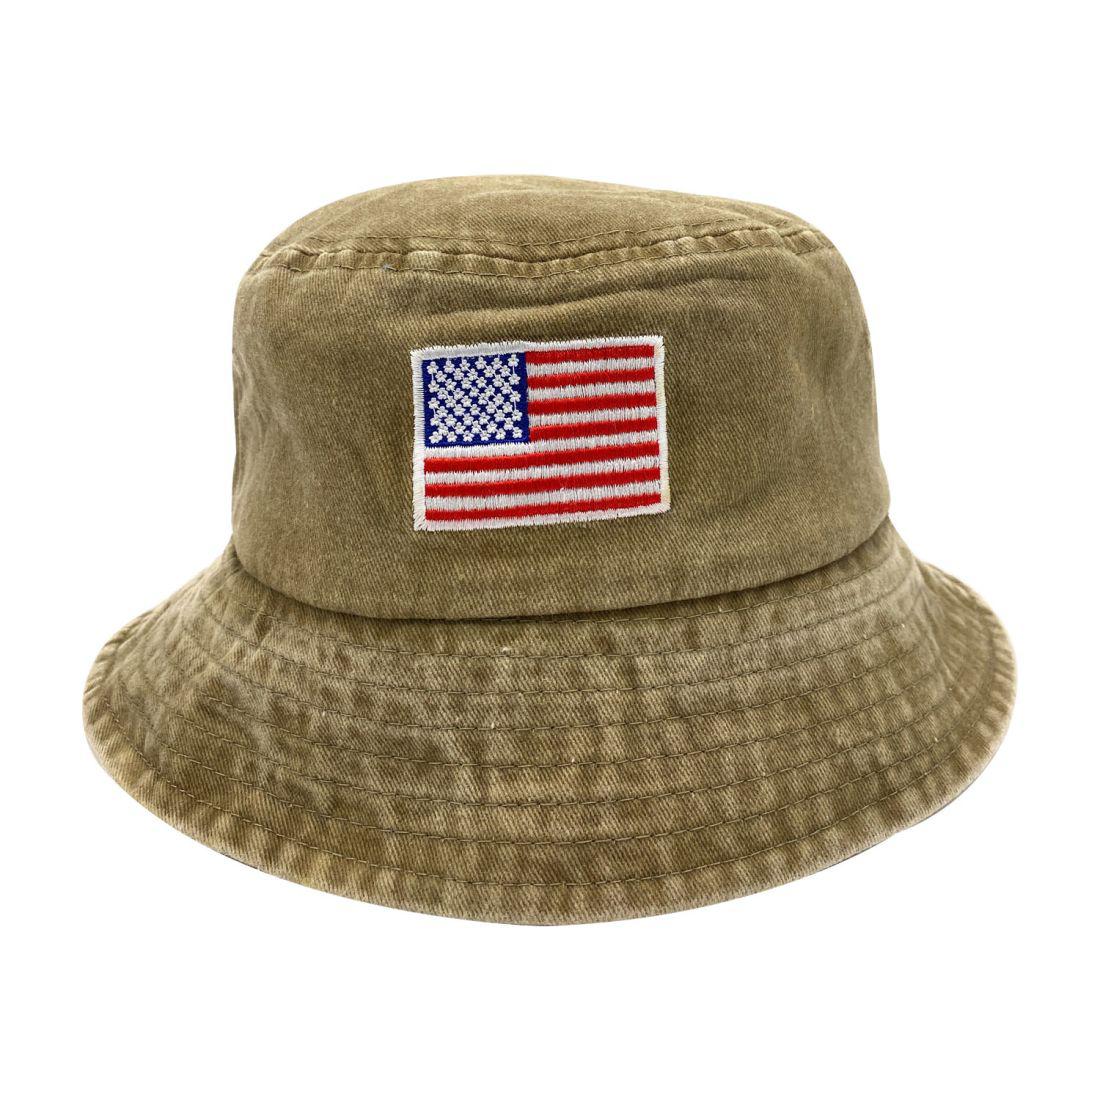 Empire Cove Washed USA Flag Cotton Bucket Hats Patriotic Hats Fisherman Cap, Black